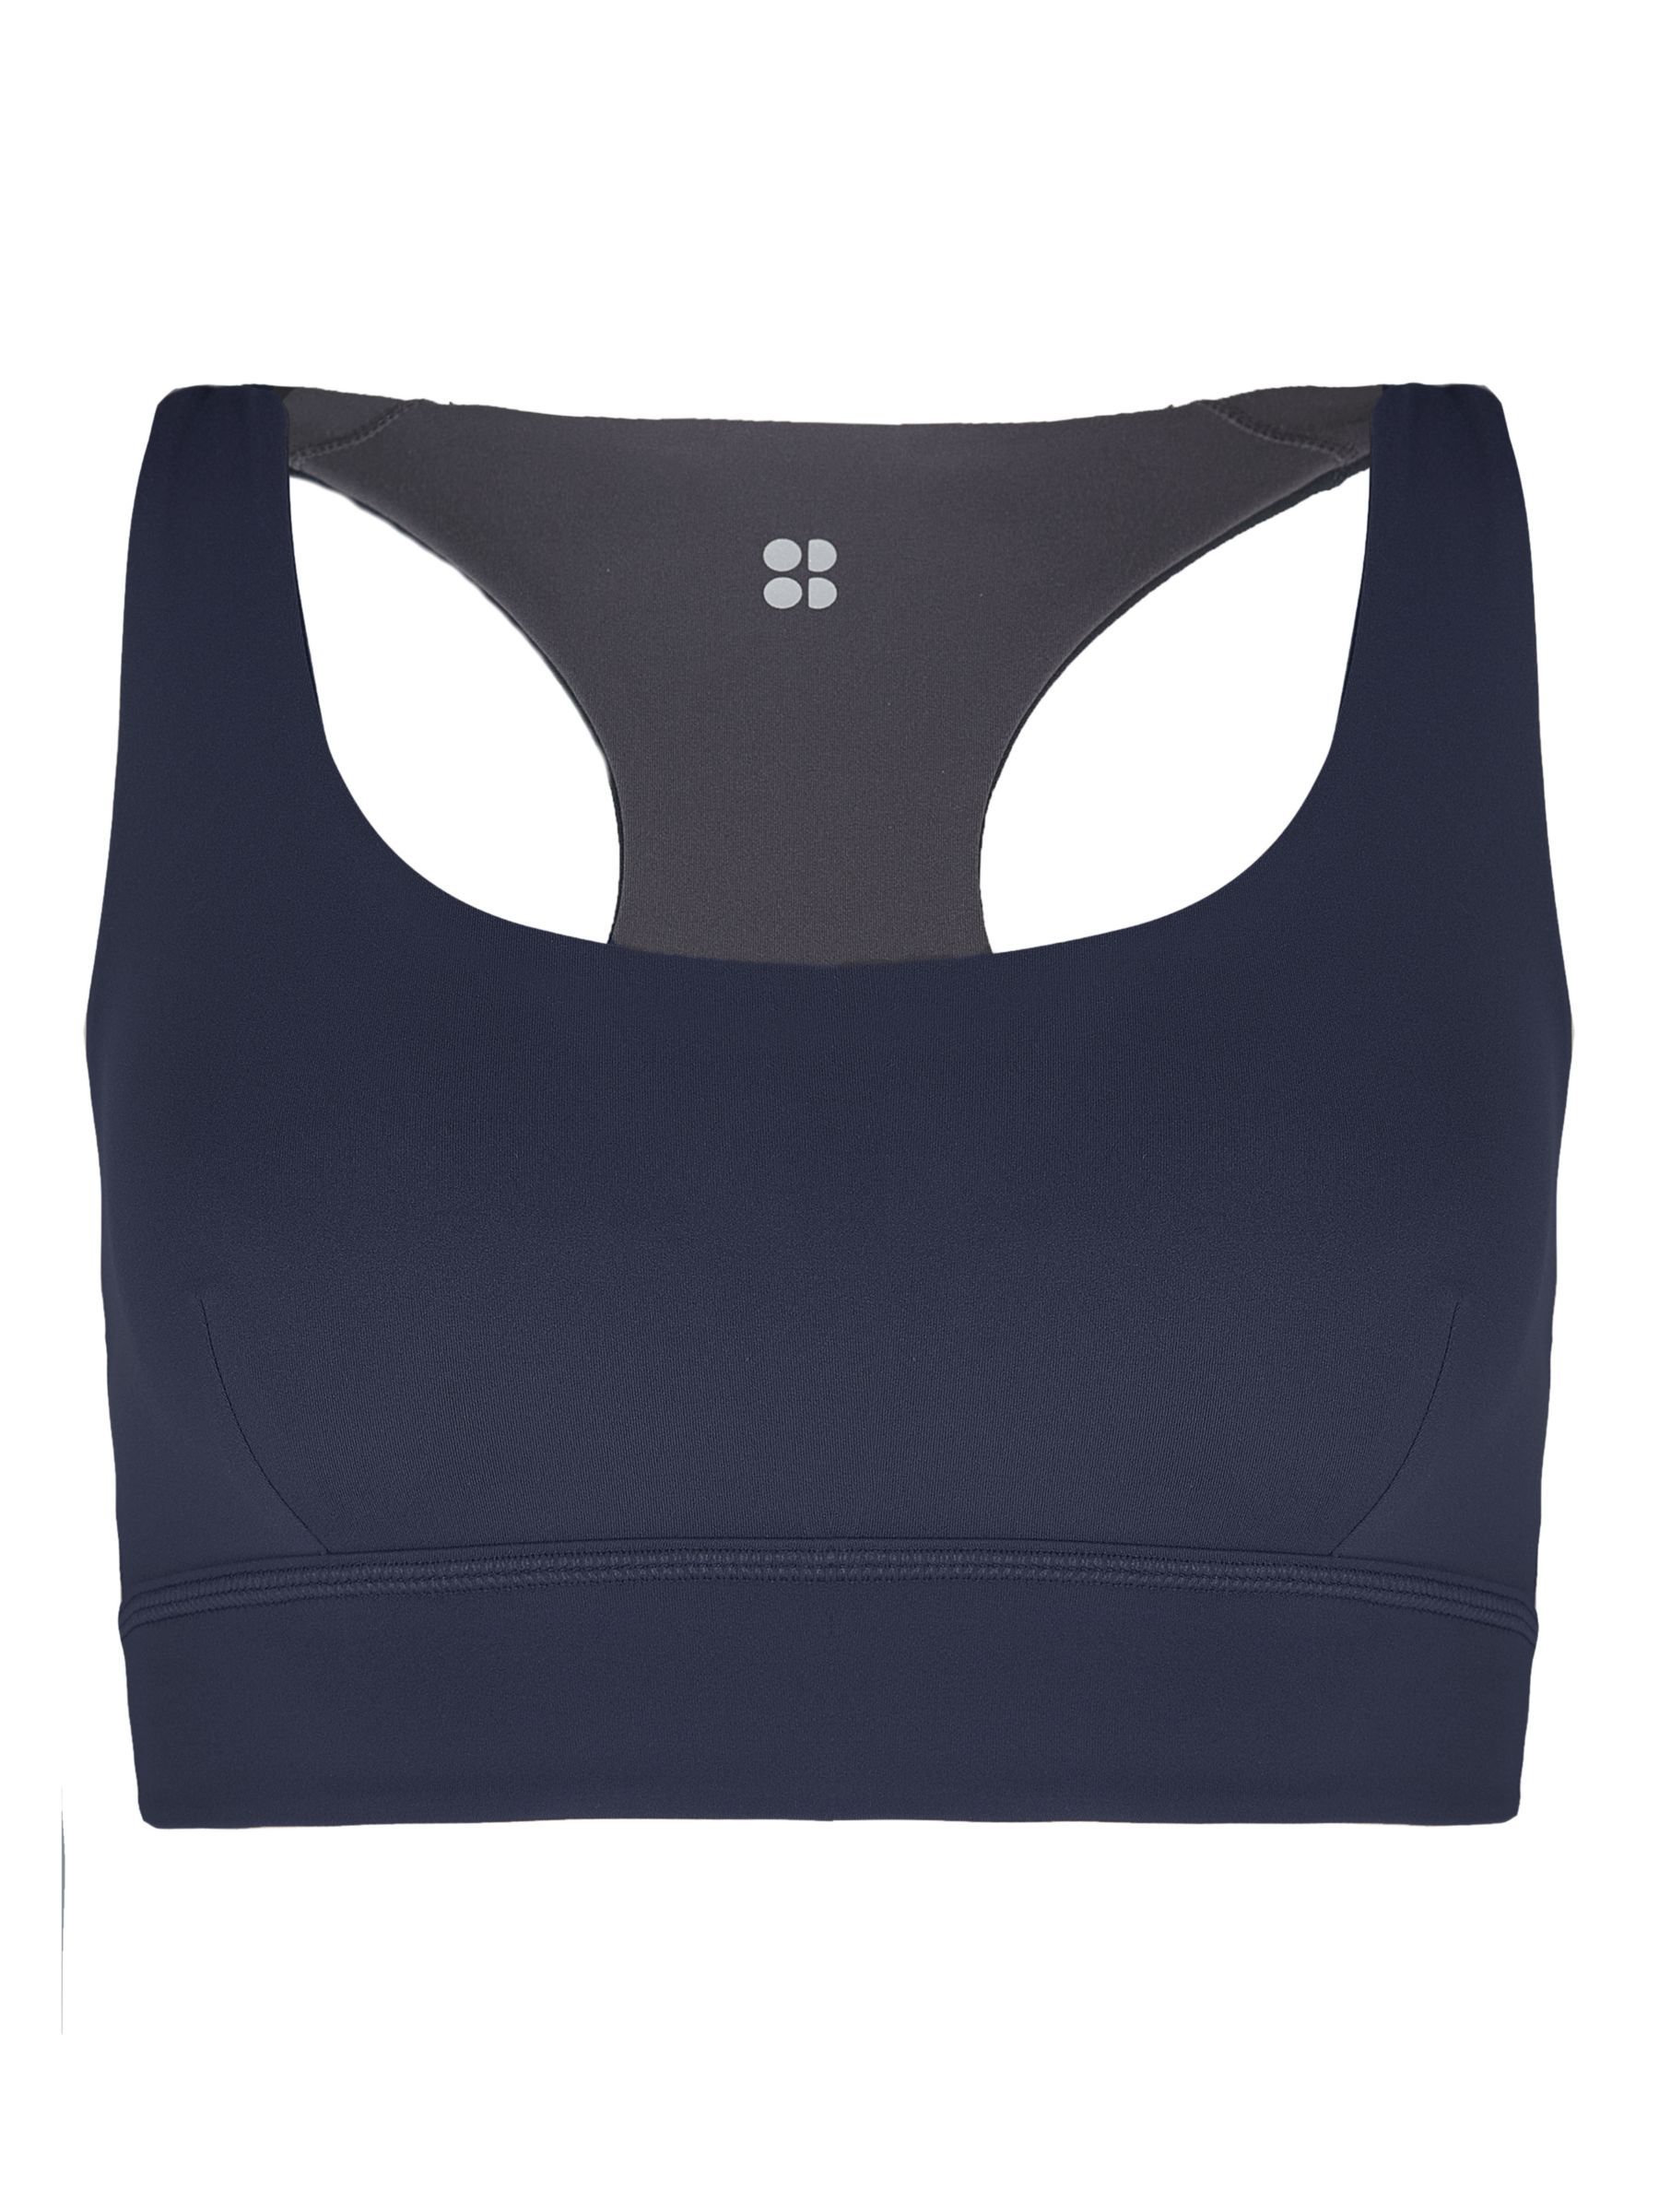 Sweaty Betty Super Soft Reversible Yoga Bra, Urban Grey/Navy, XXS